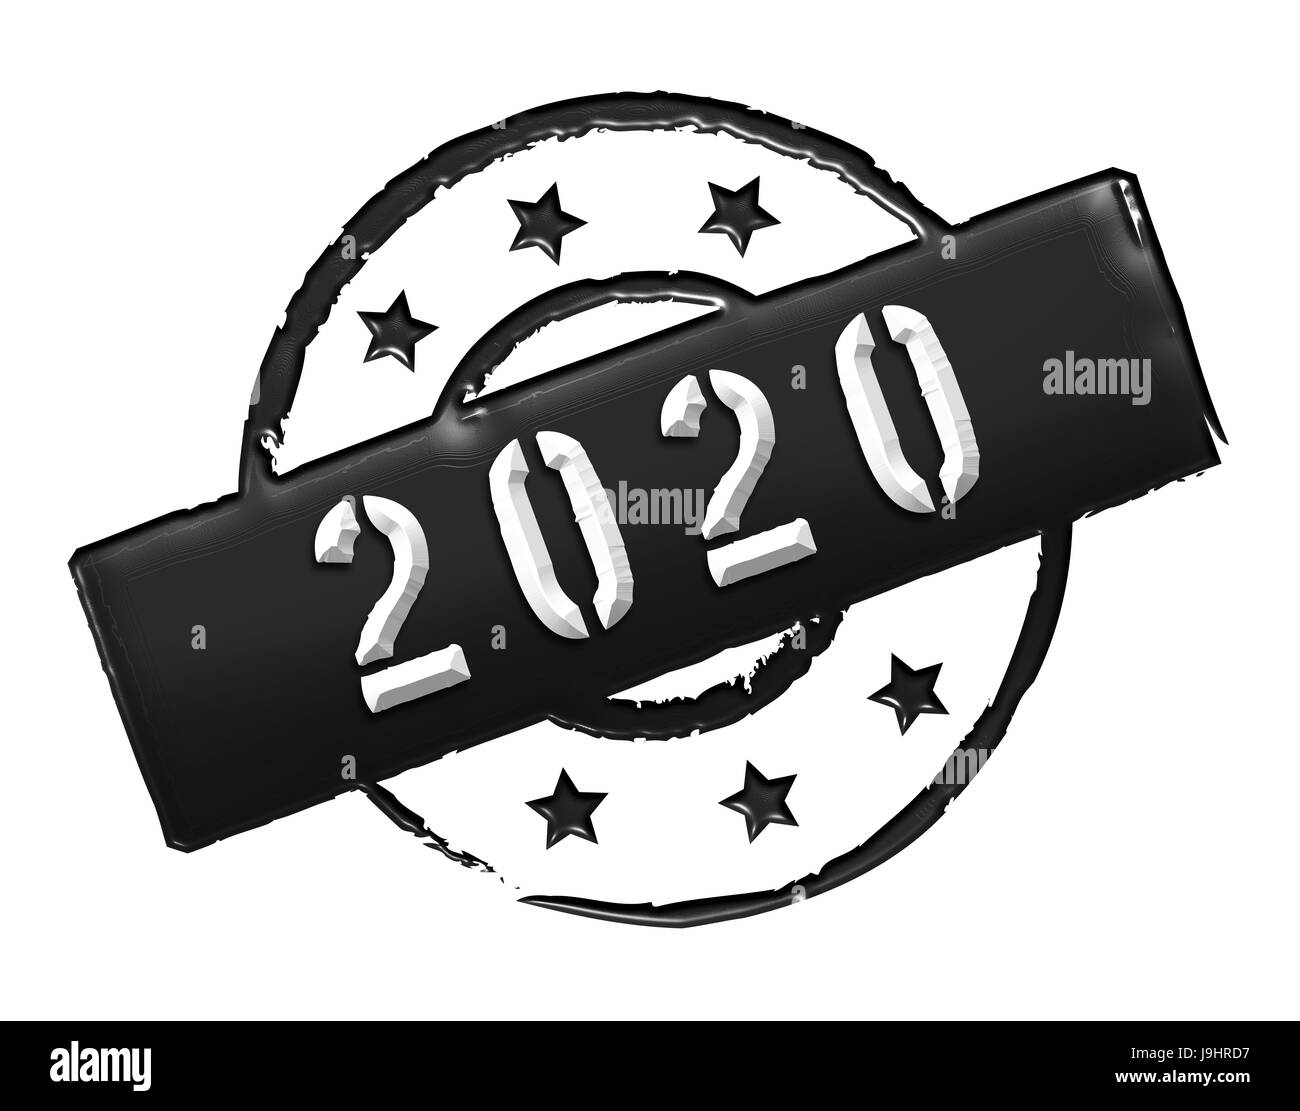 2020 - stamp Stock Photo